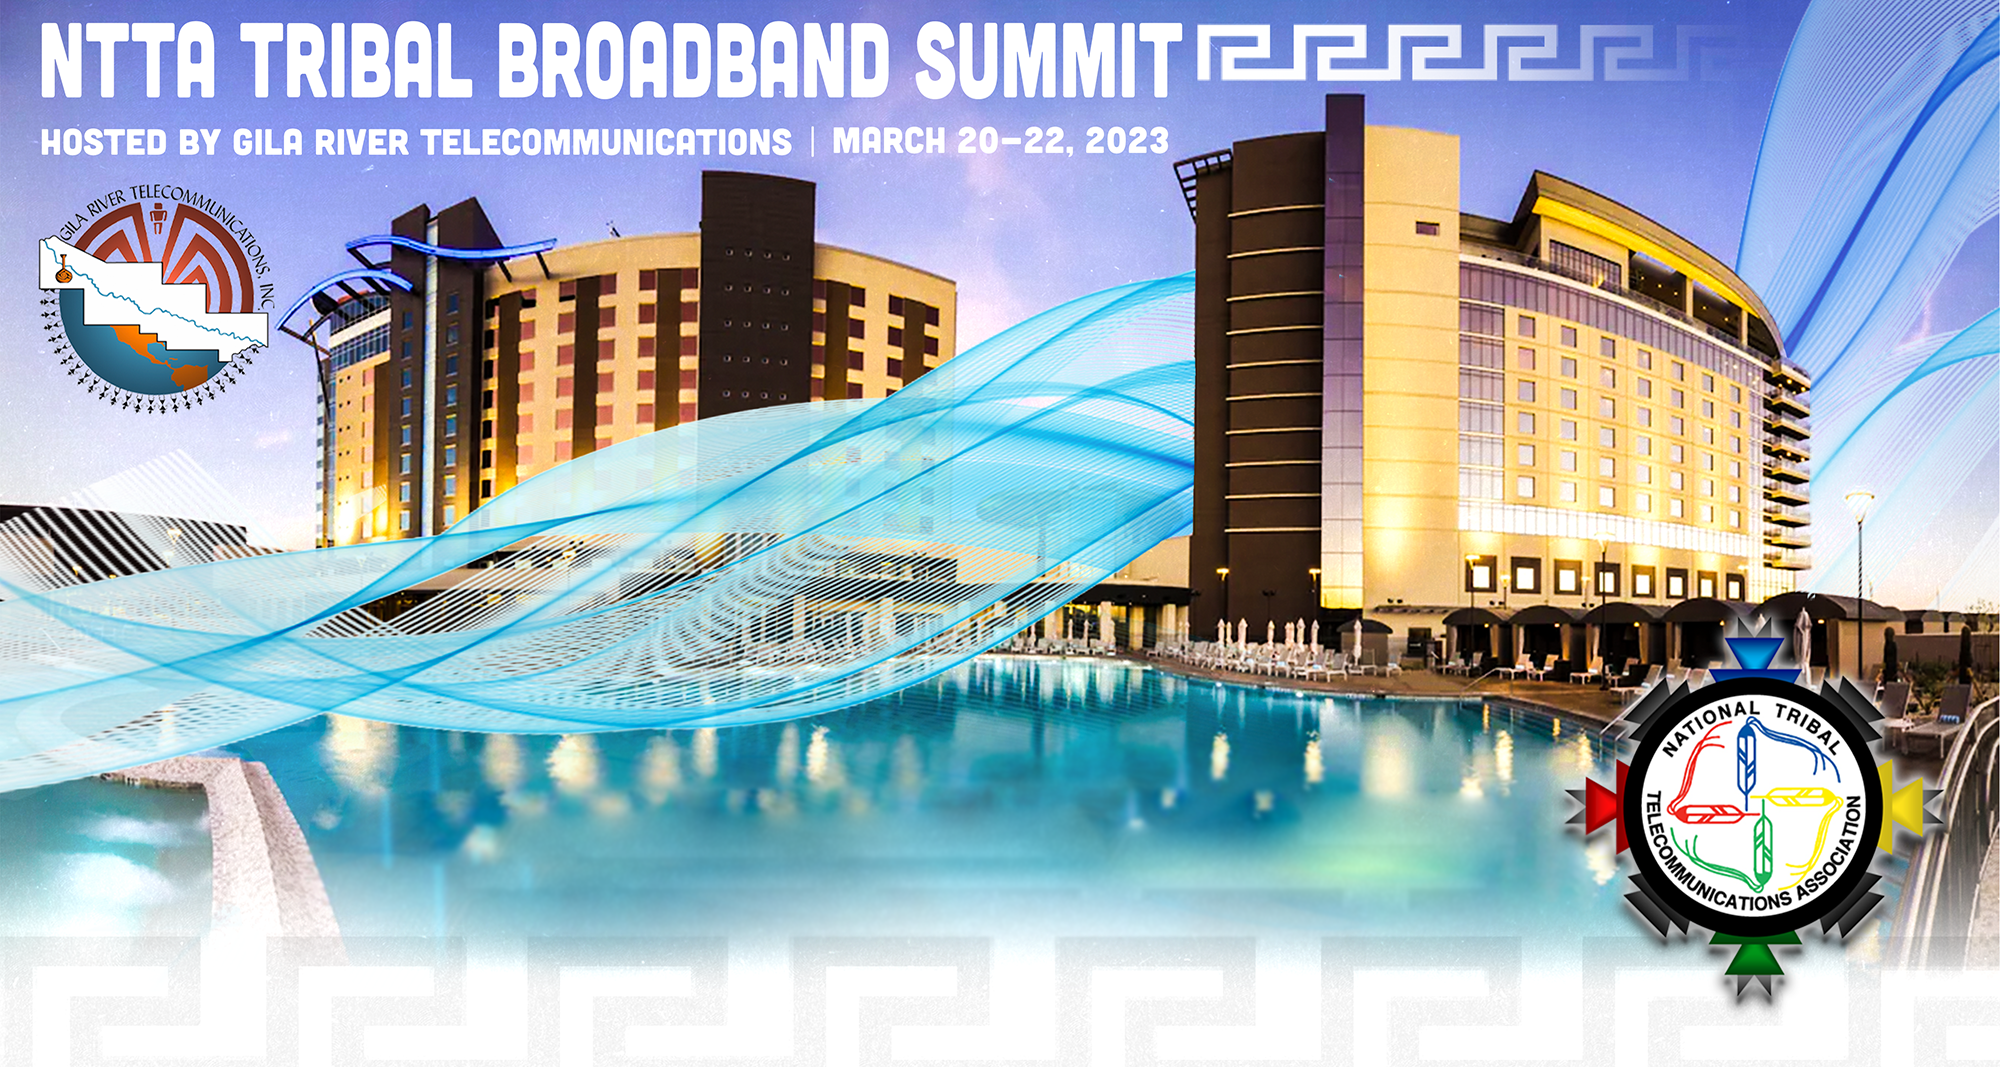 NTTA Summit 2023 cover image